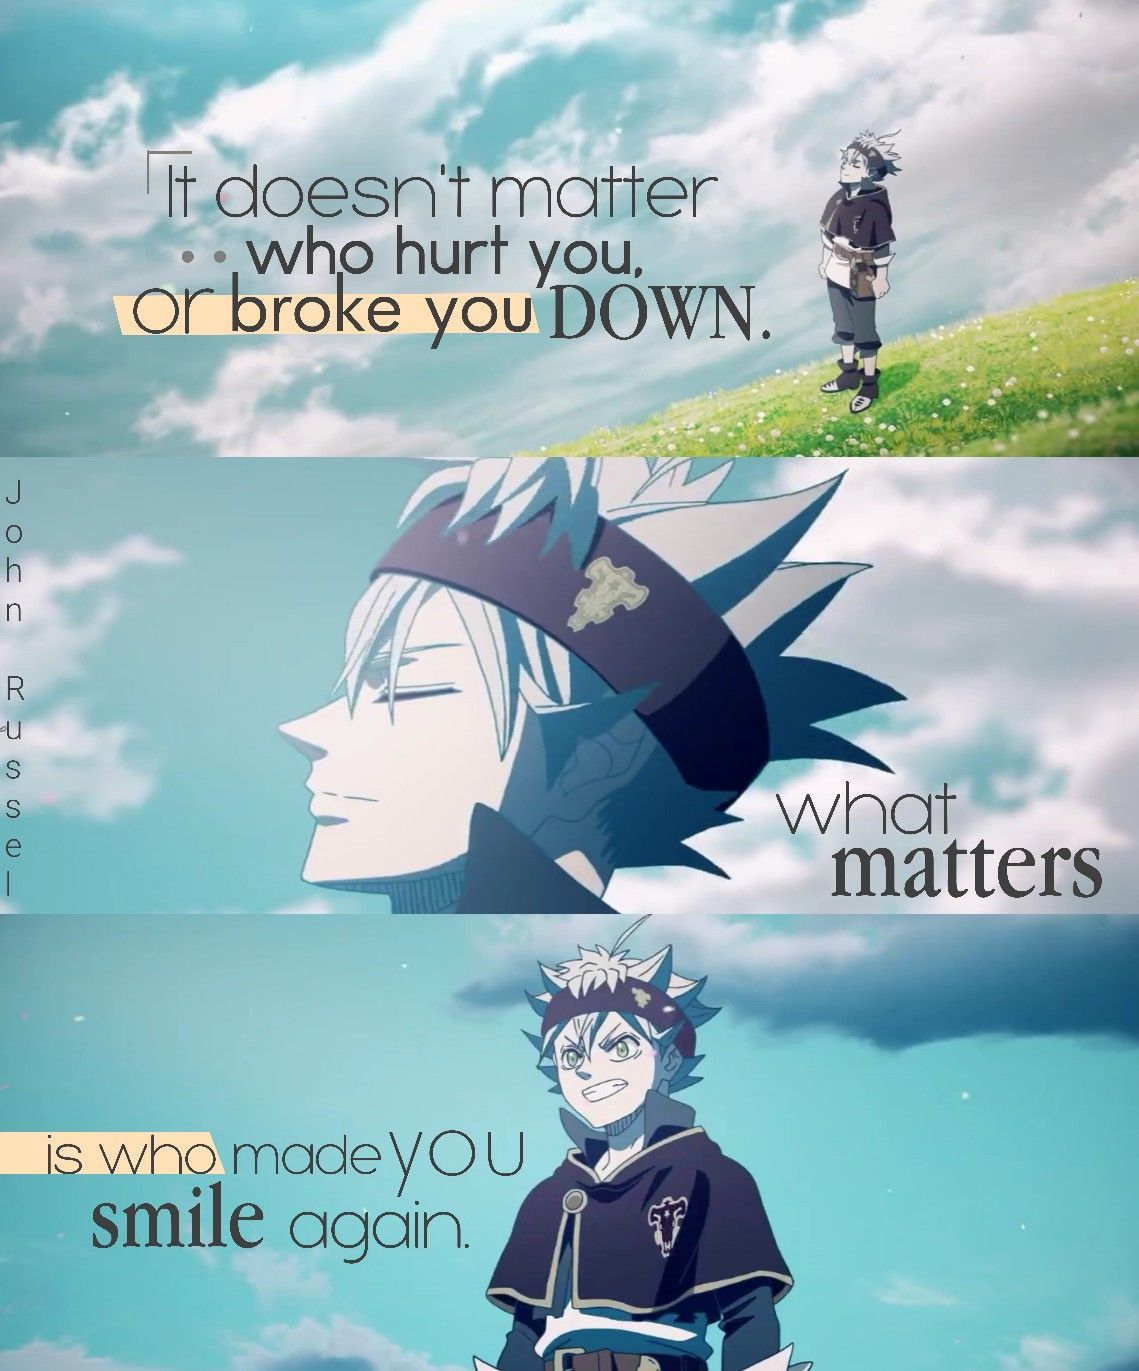 Black clover. Anime quotes inspirational, Anime quotes, Anime motivational quotes